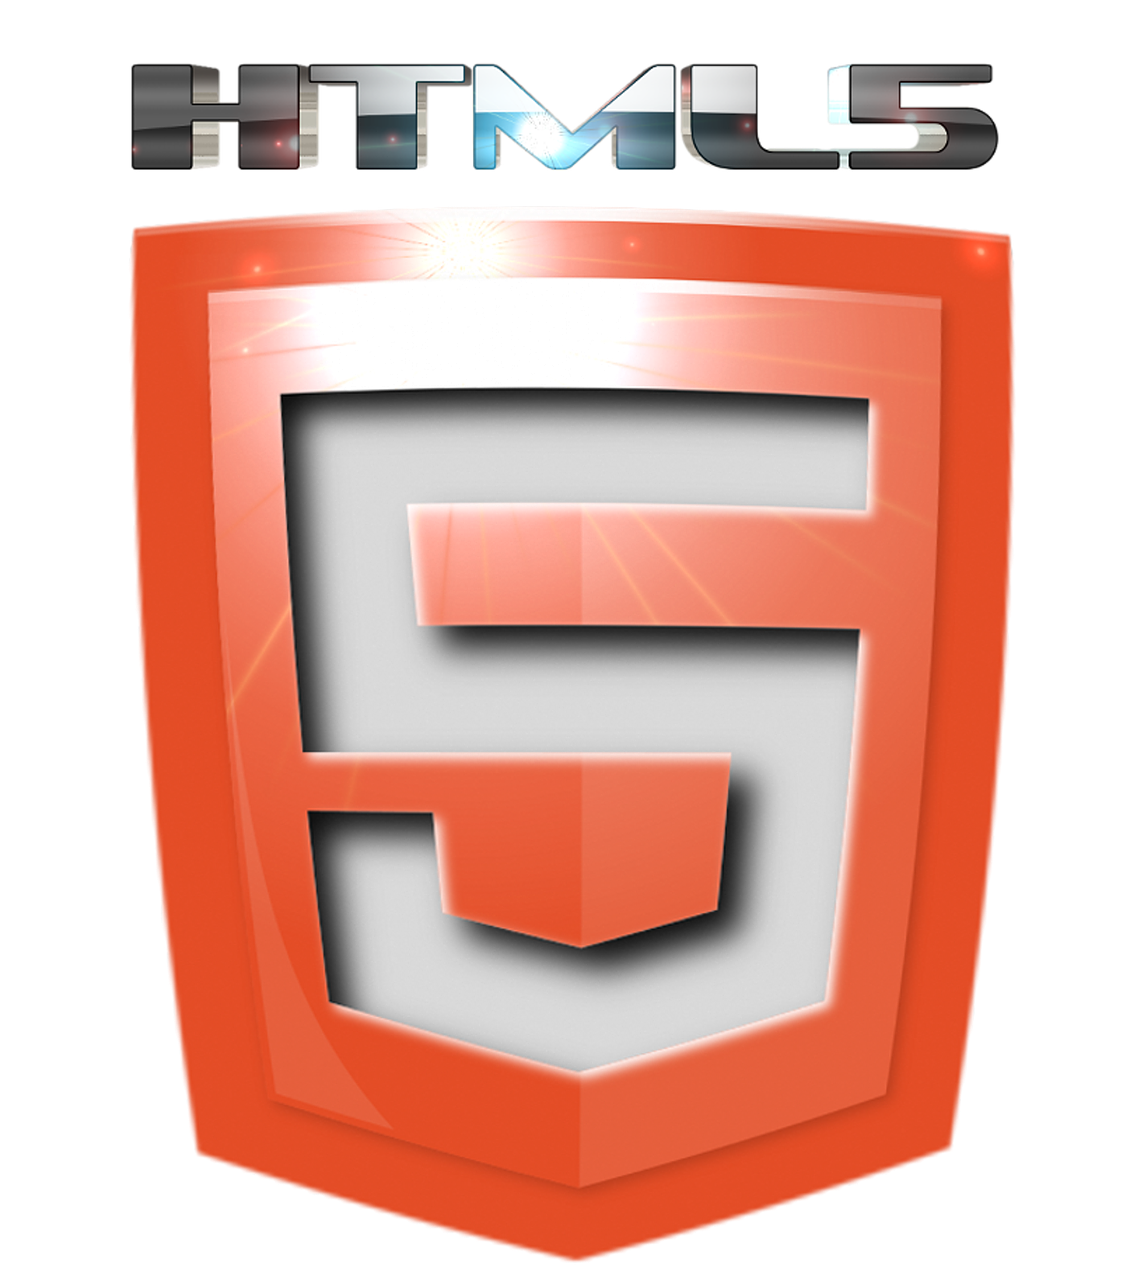 html5 icon graphics free photo